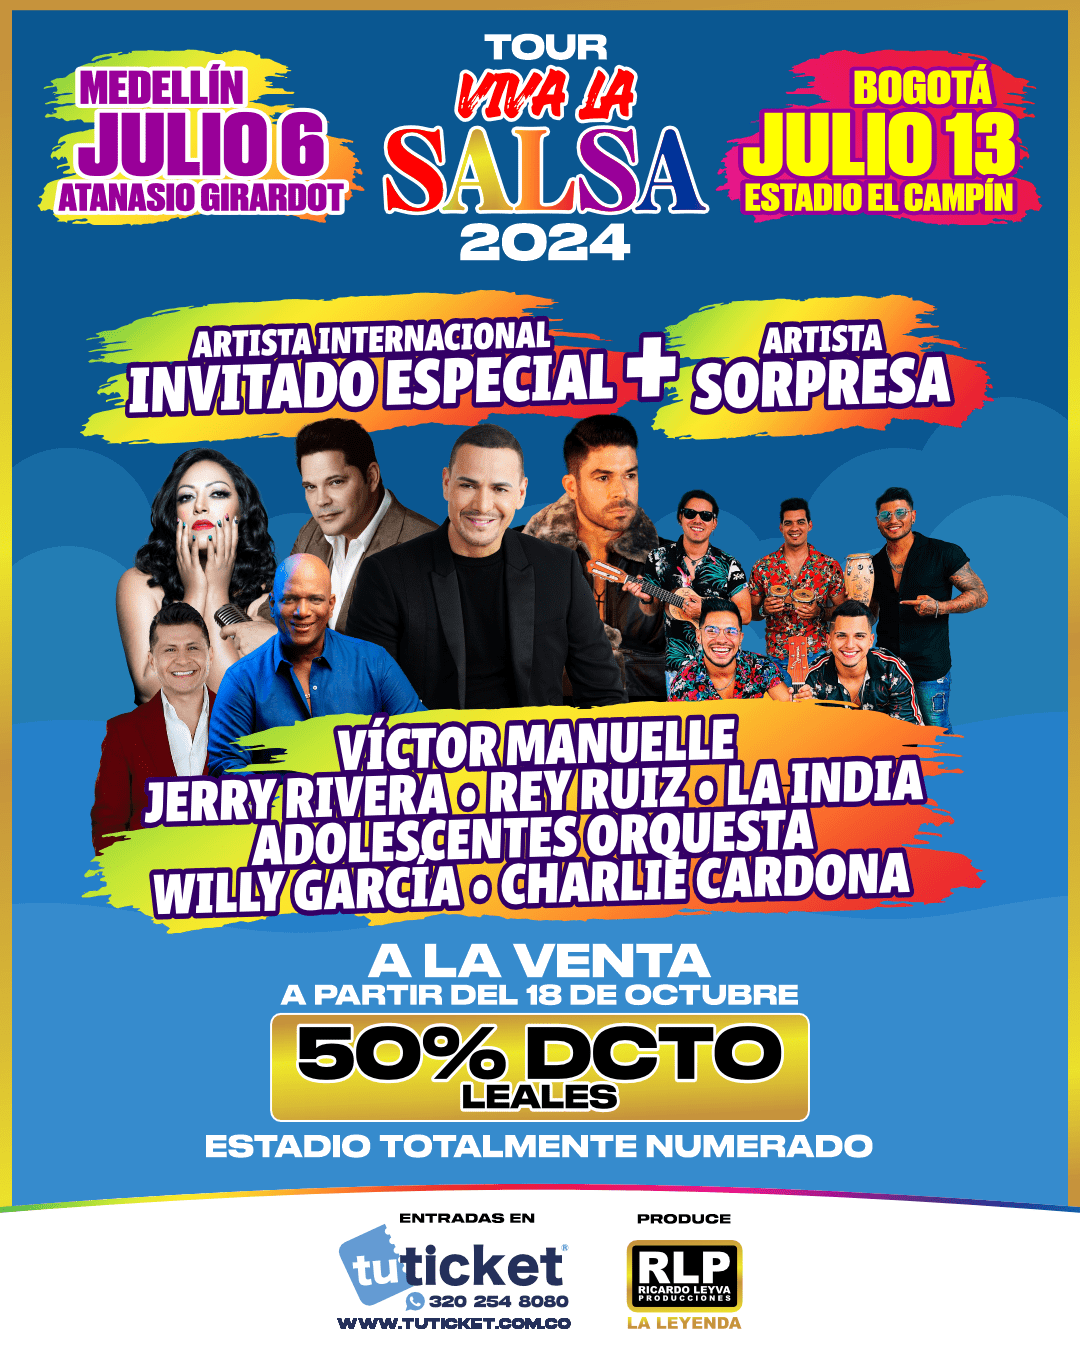 Tour Viva la Salsa 2024 Primeras Fechas Confirmadas en Bogotá y